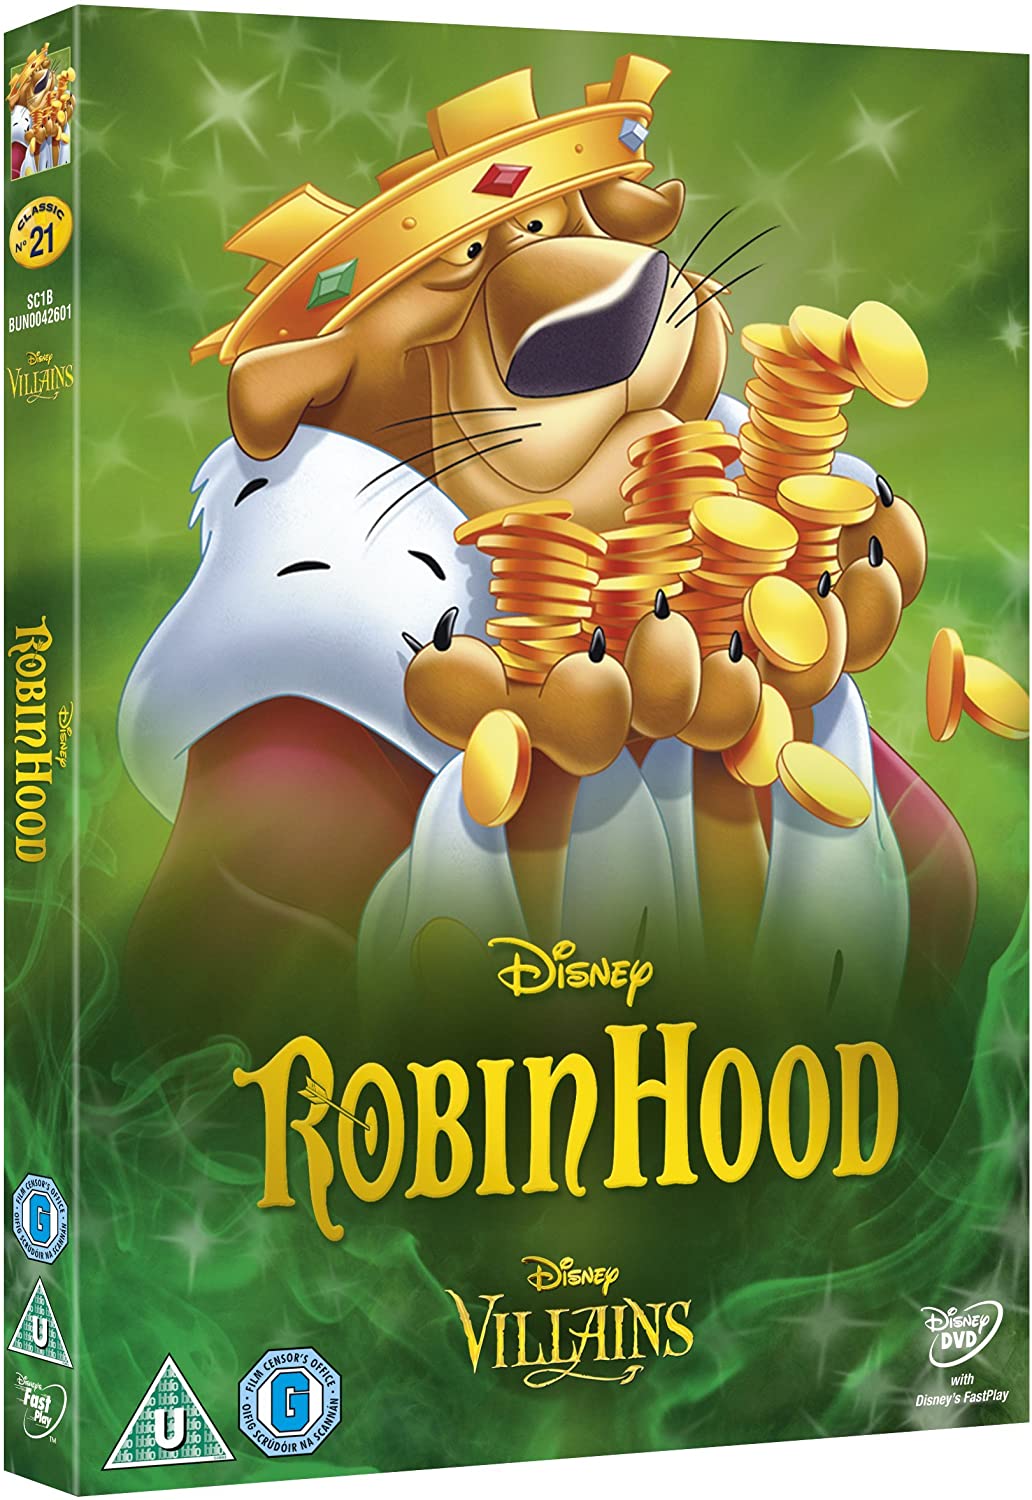 Robin Hood (1973) (Special Edition Artwork Sleeve) [DVD]